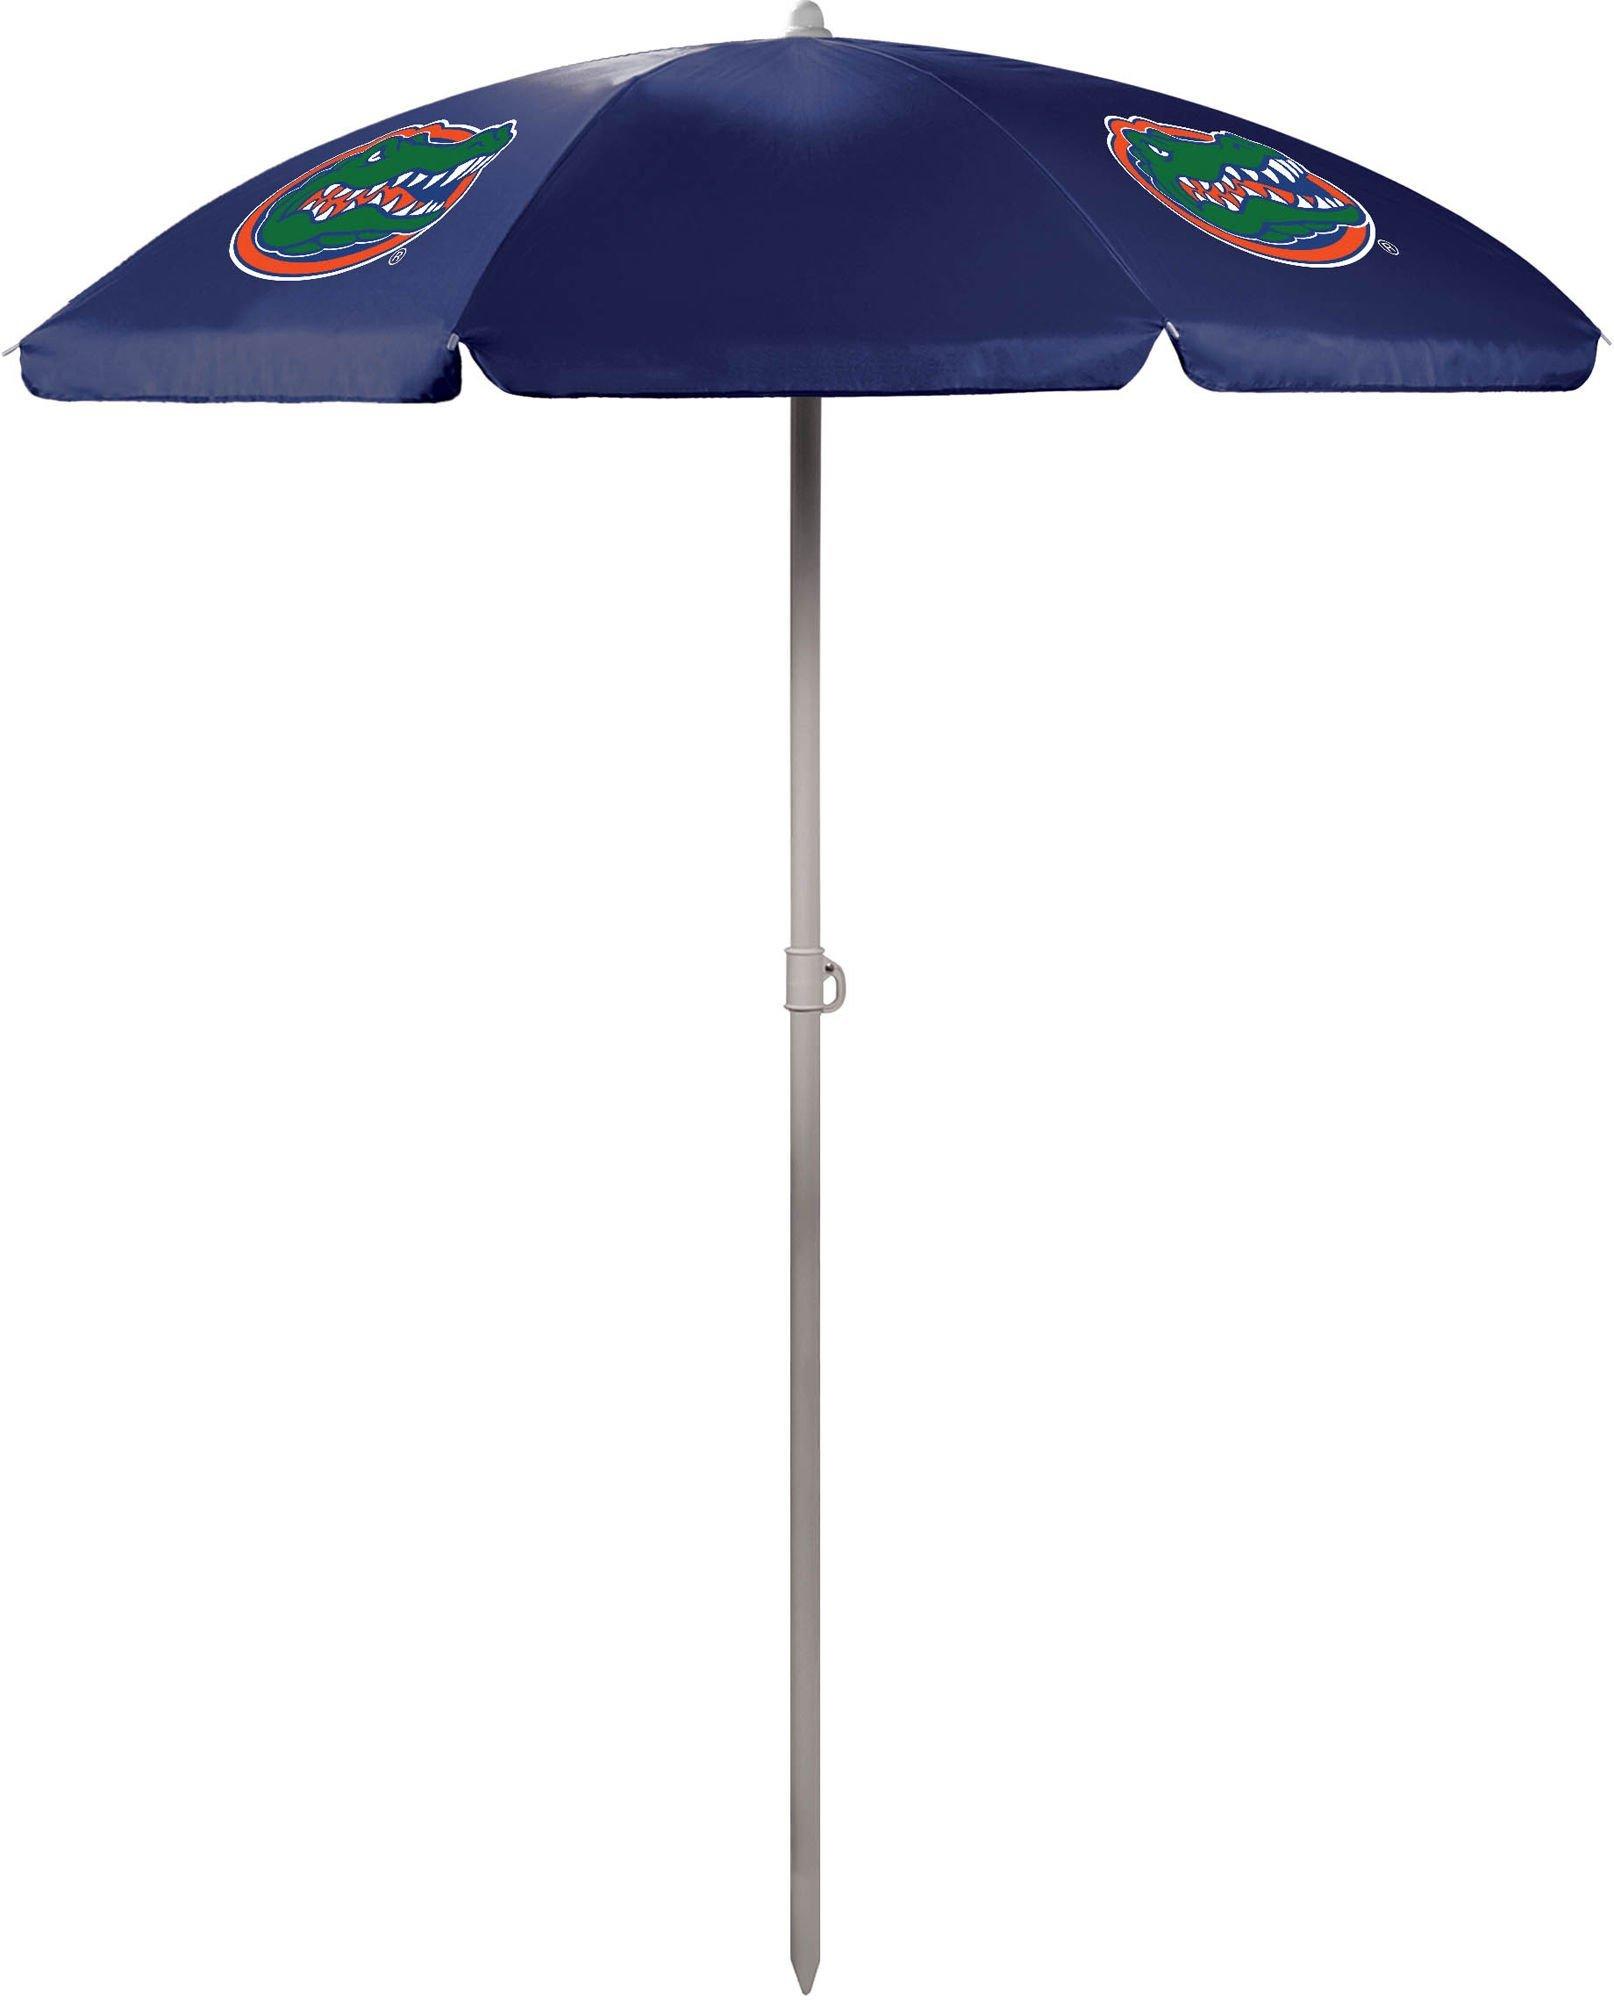 Florida Gators 5.5' Portable Umbrella by Oniva